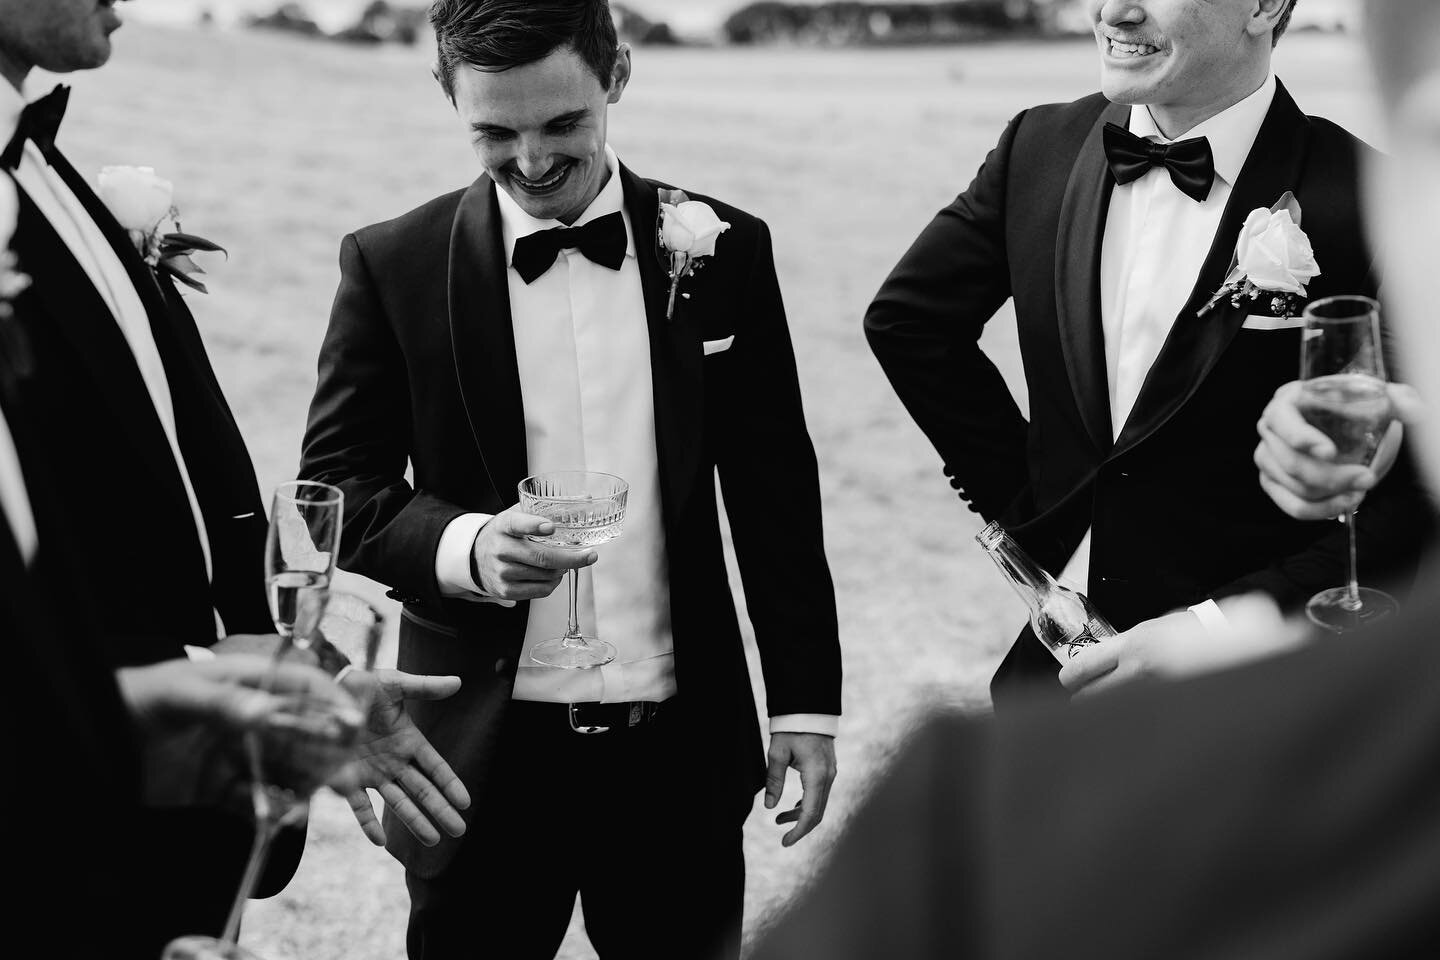 The fellas on the champas 🥂 keeping it classy ✨

#blacktiewedding #champagne #adelaideweddingphotographer #modernweddings #australiaweddingphotographer